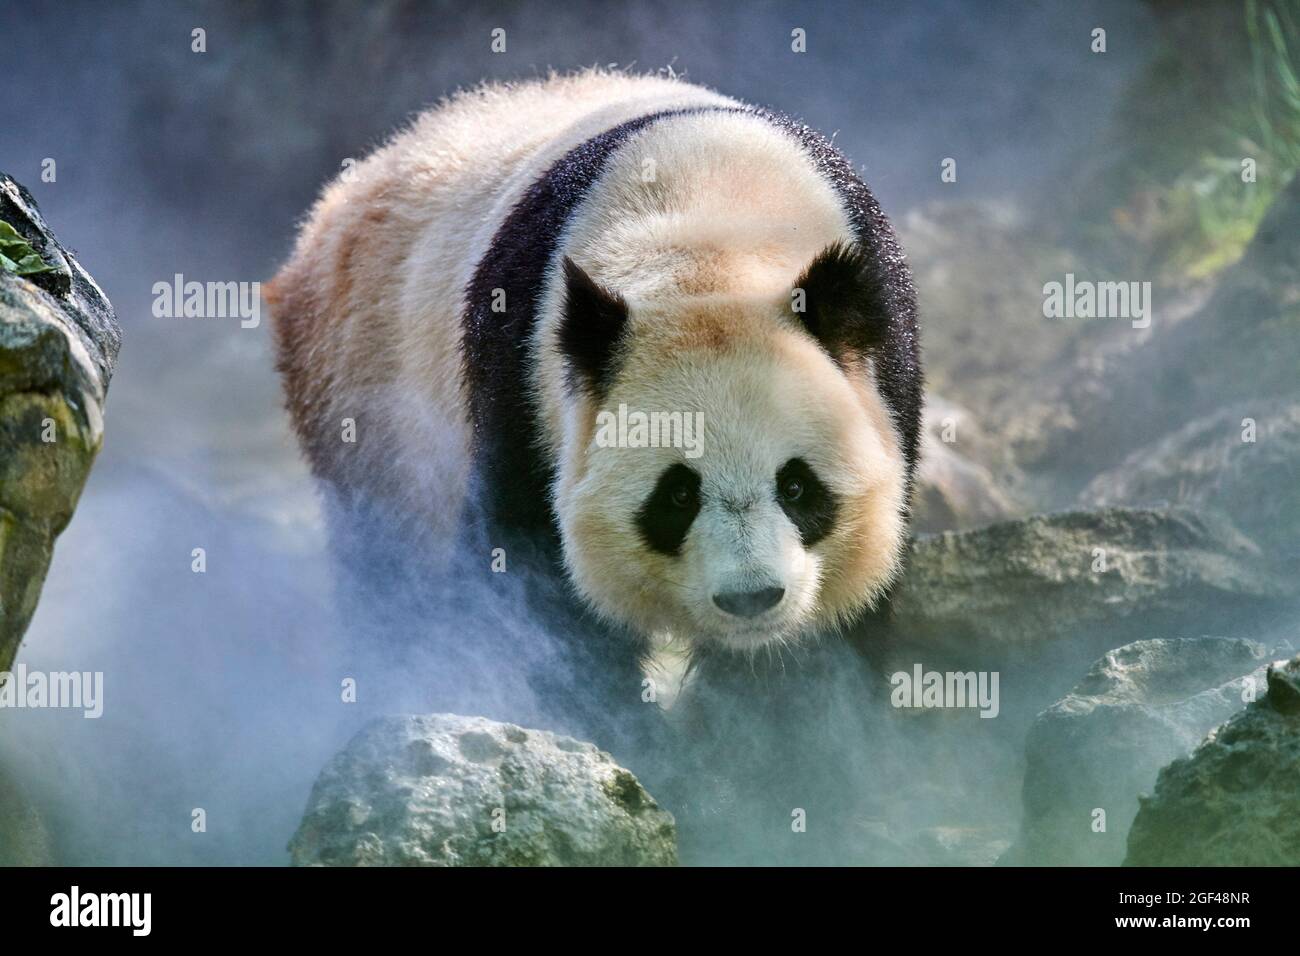 Panda gigante (Ailuropoda melanoleuca) femmina Huan Huan Huan fuori nel suo recinto in nebbia, Captive al Beauval Zoo, Saint Aignan sur Cher, Francia. La nebbia Foto Stock